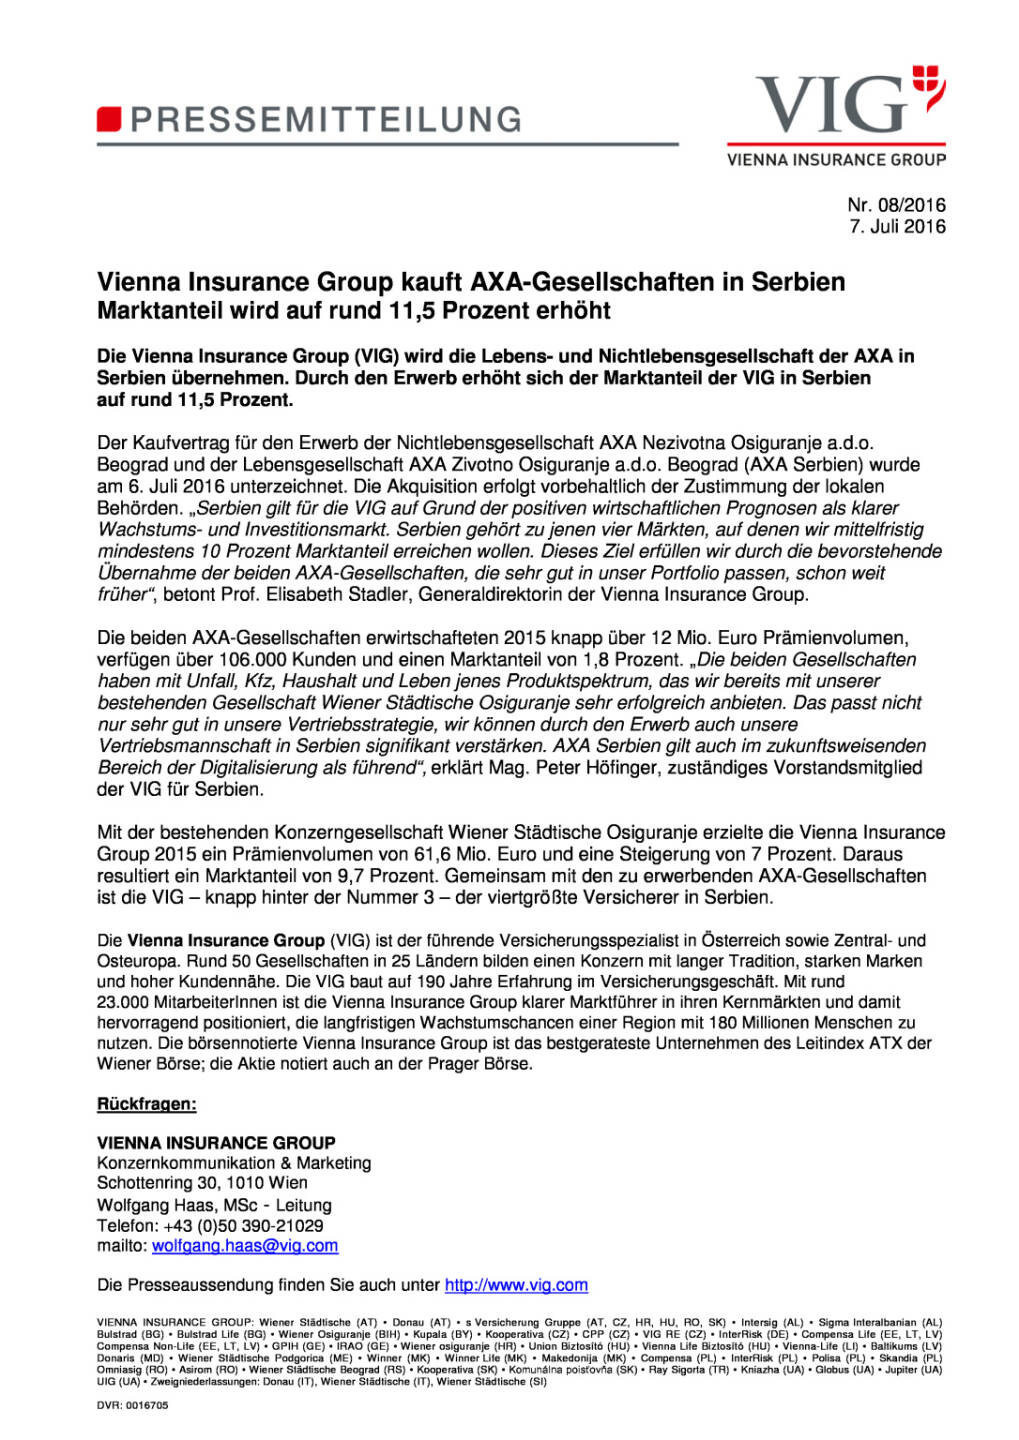 Vienna Insurance Group kauft AXA-Gesellschaften in Serbien , Seite 1/1, komplettes Dokument unter http://boerse-social.com/static/uploads/file_1349_vienna_insurance_group_kauft_axa-gesellschaften_in_serbien.pdf